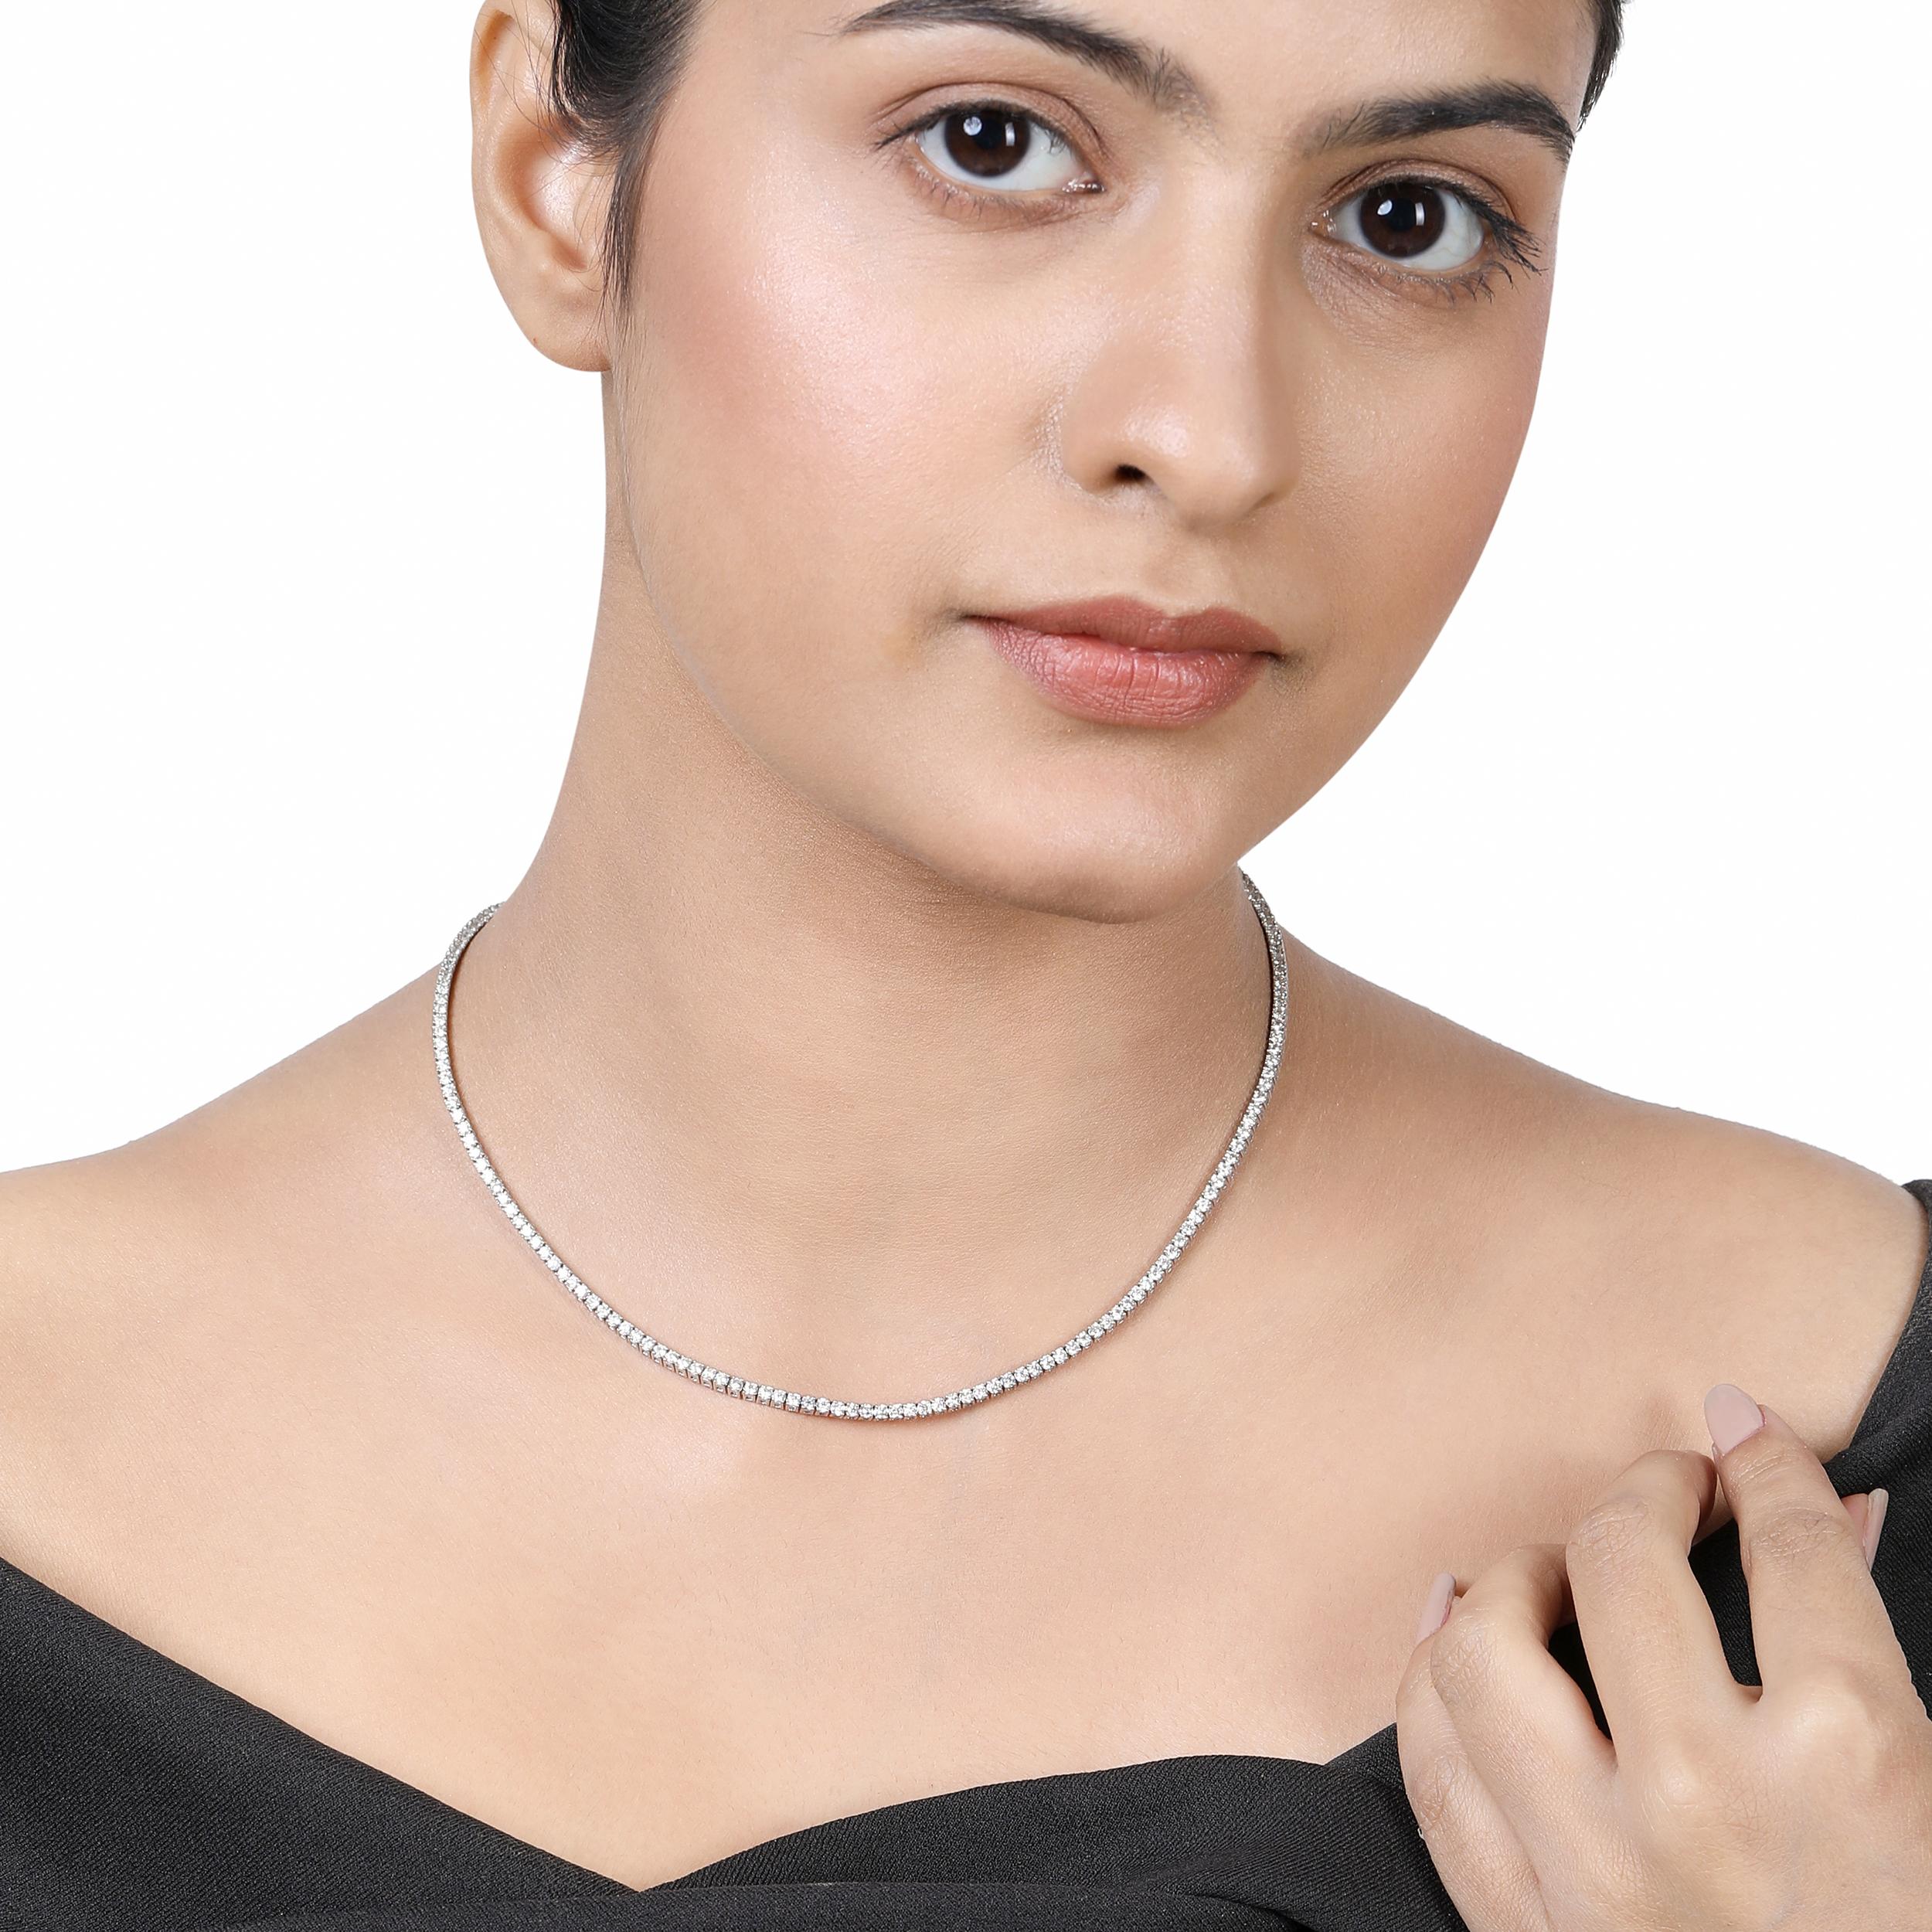 diamond necklace price in india